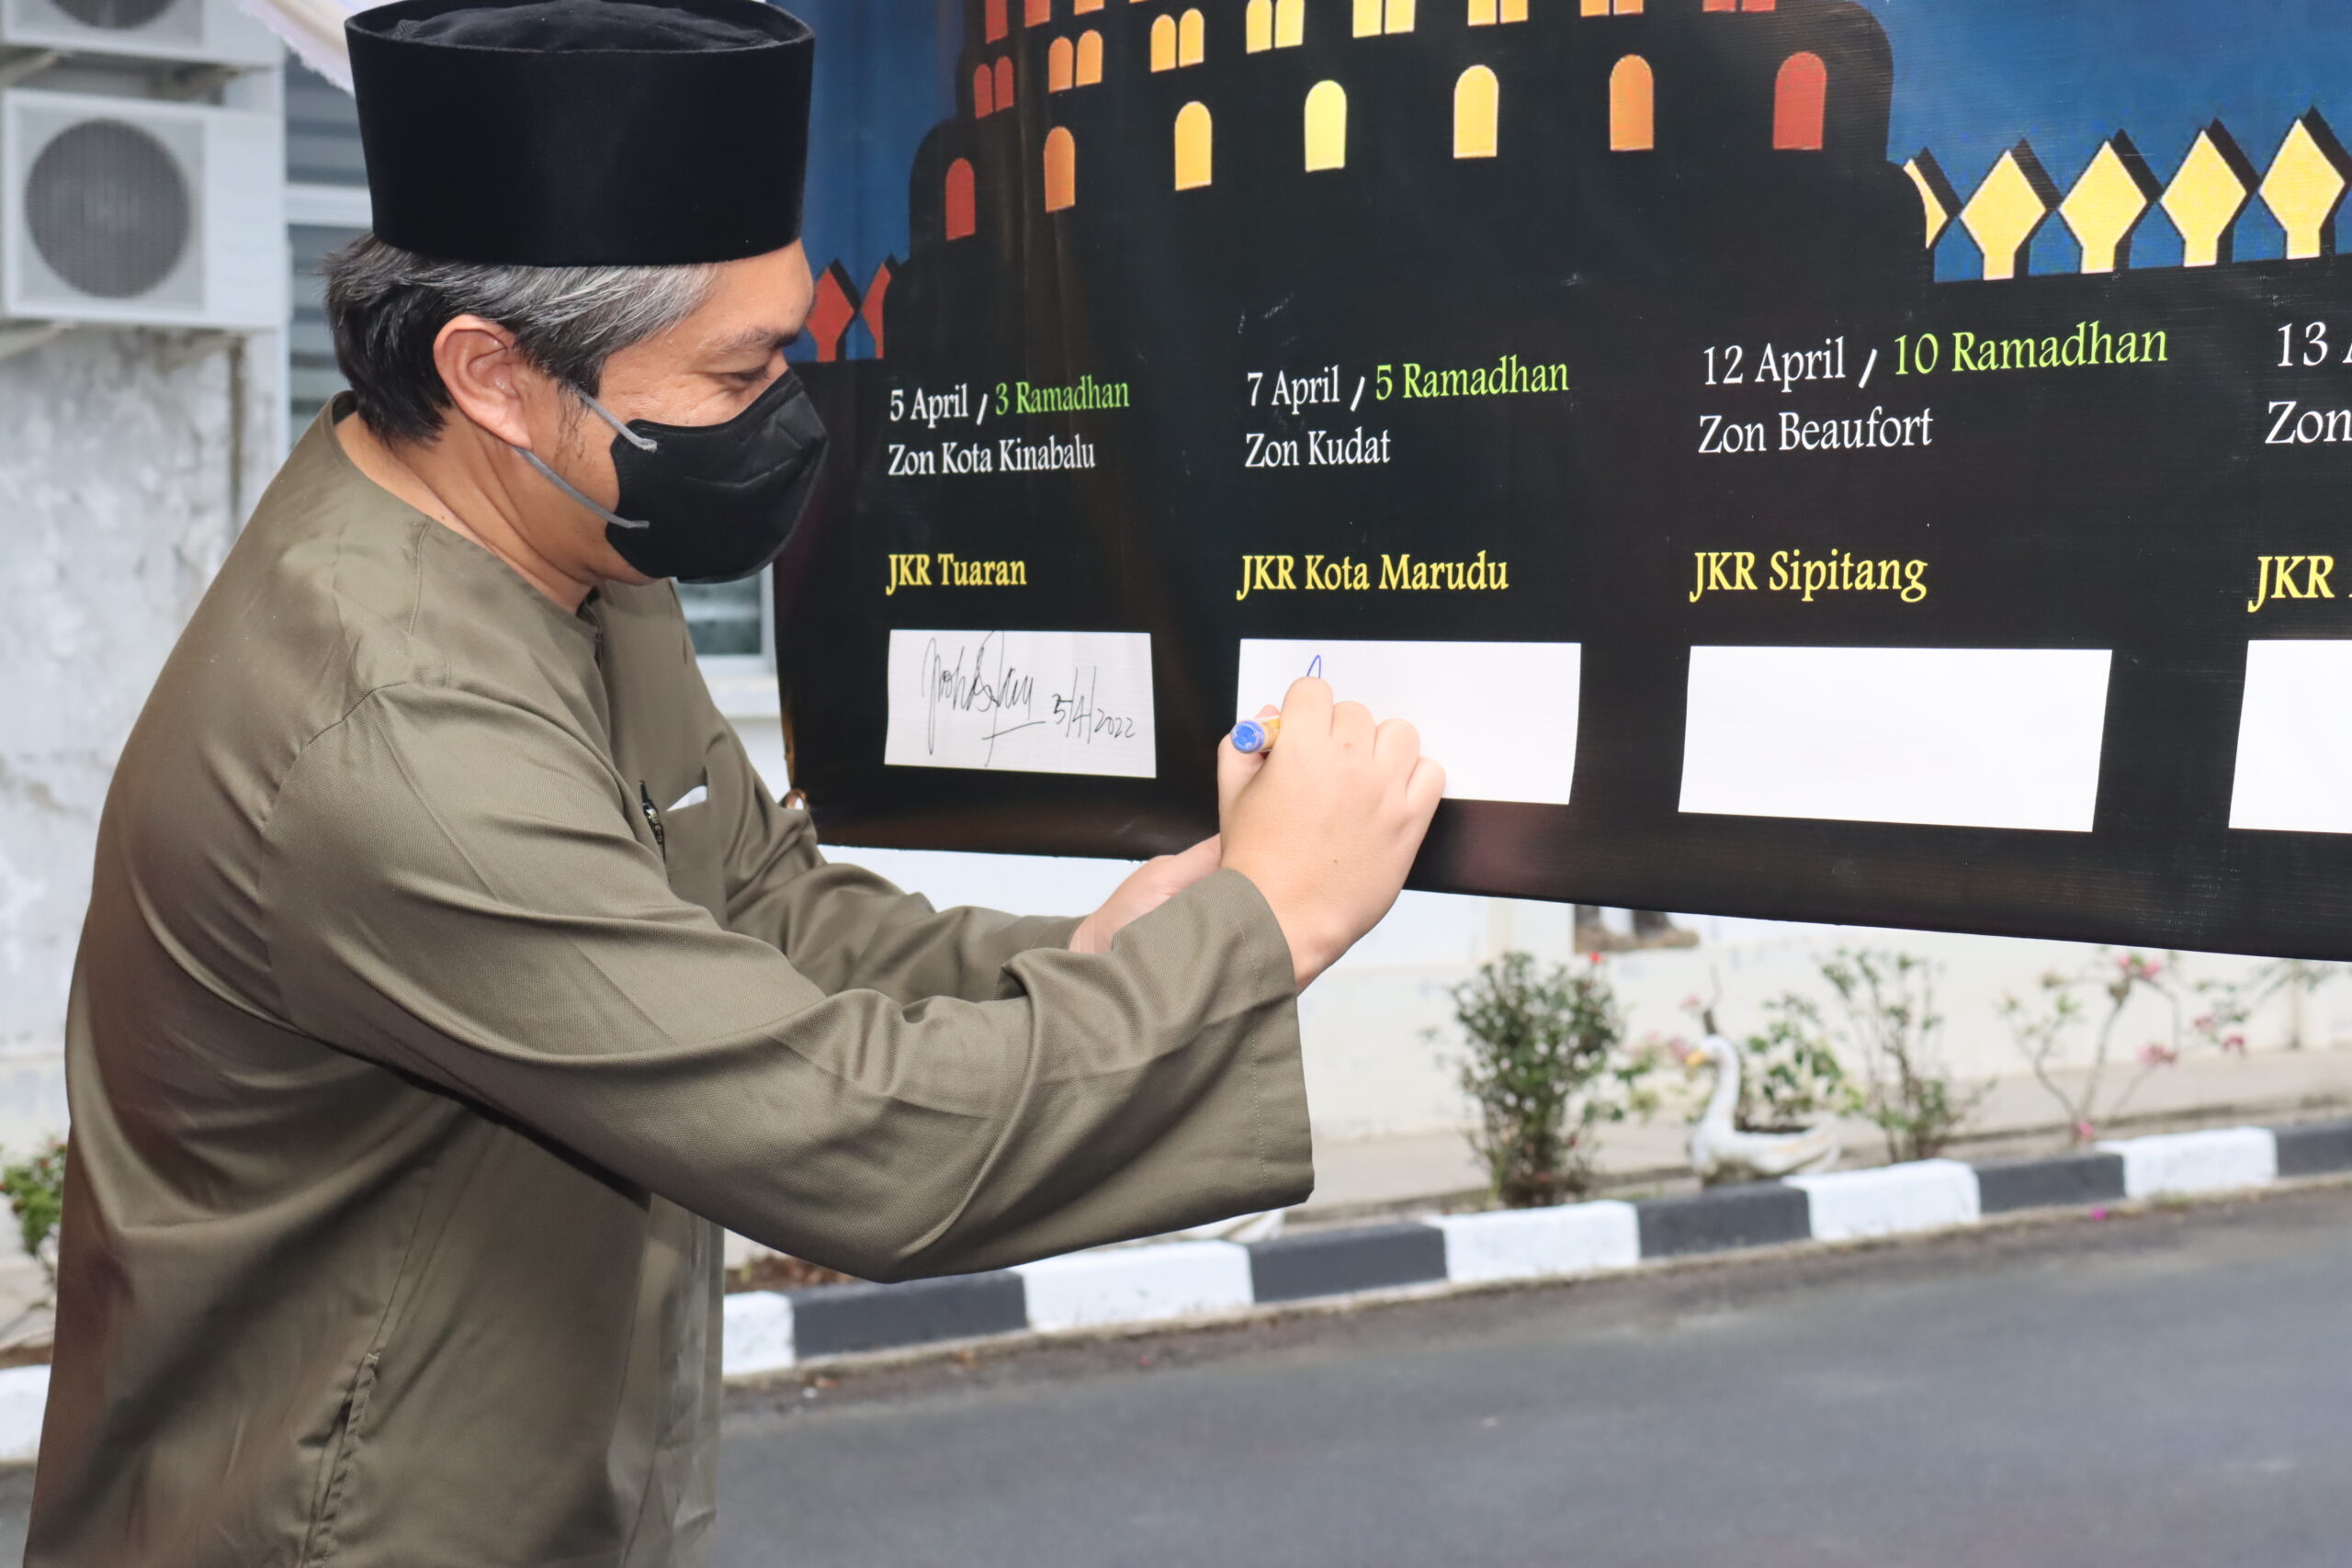 Jelajah Ramadhan JKR Sabah : JKR Kota Marudu